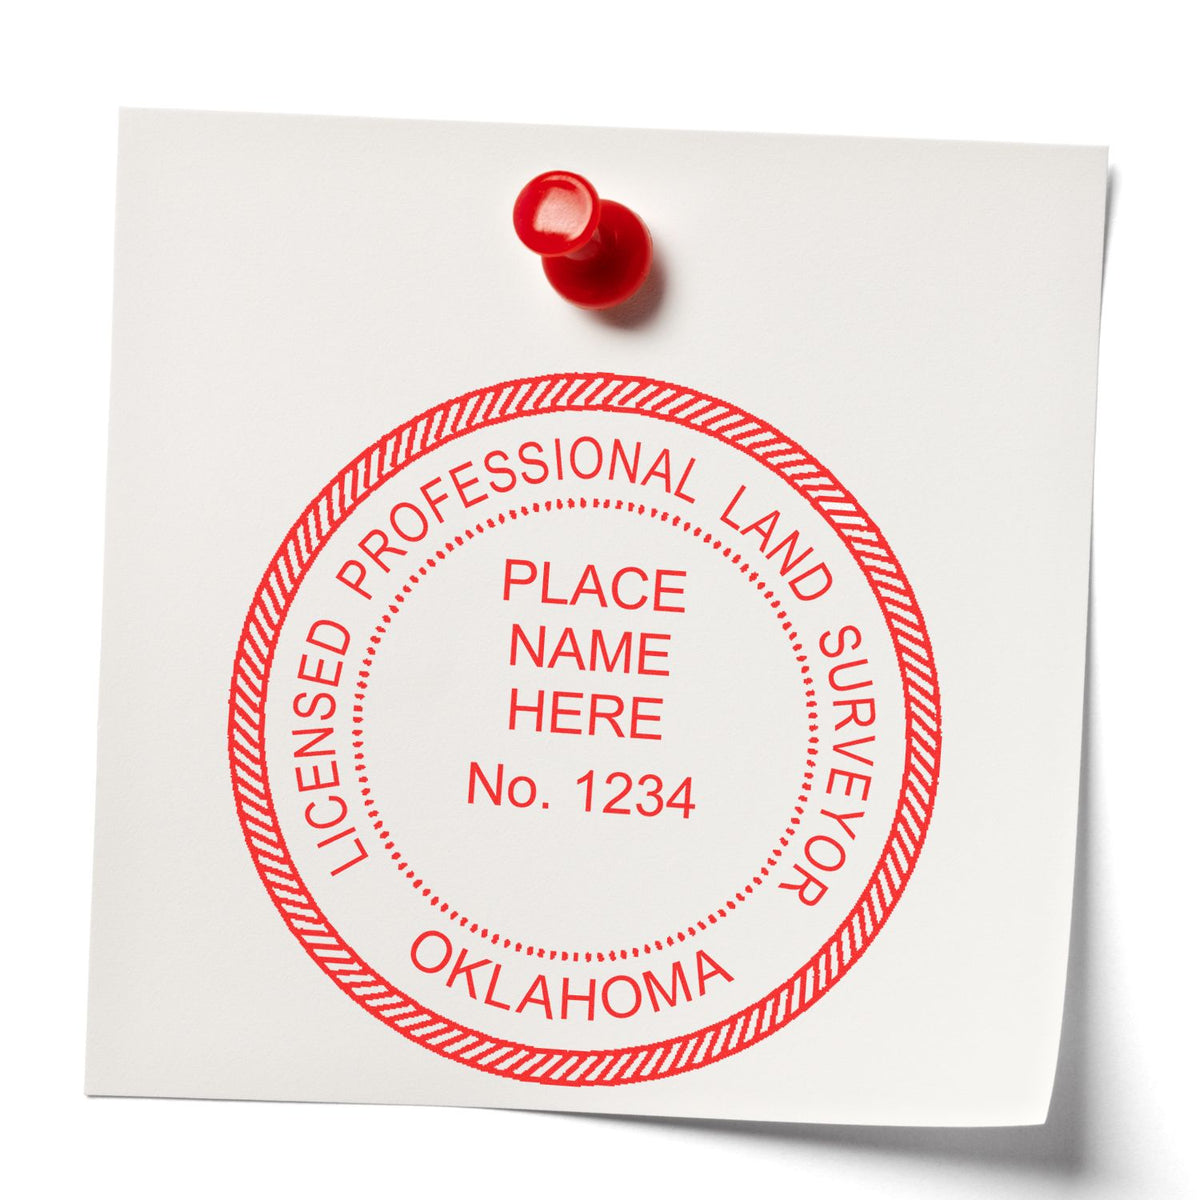 Oklahoma Land Surveyor Seal Stamp In Use Photo